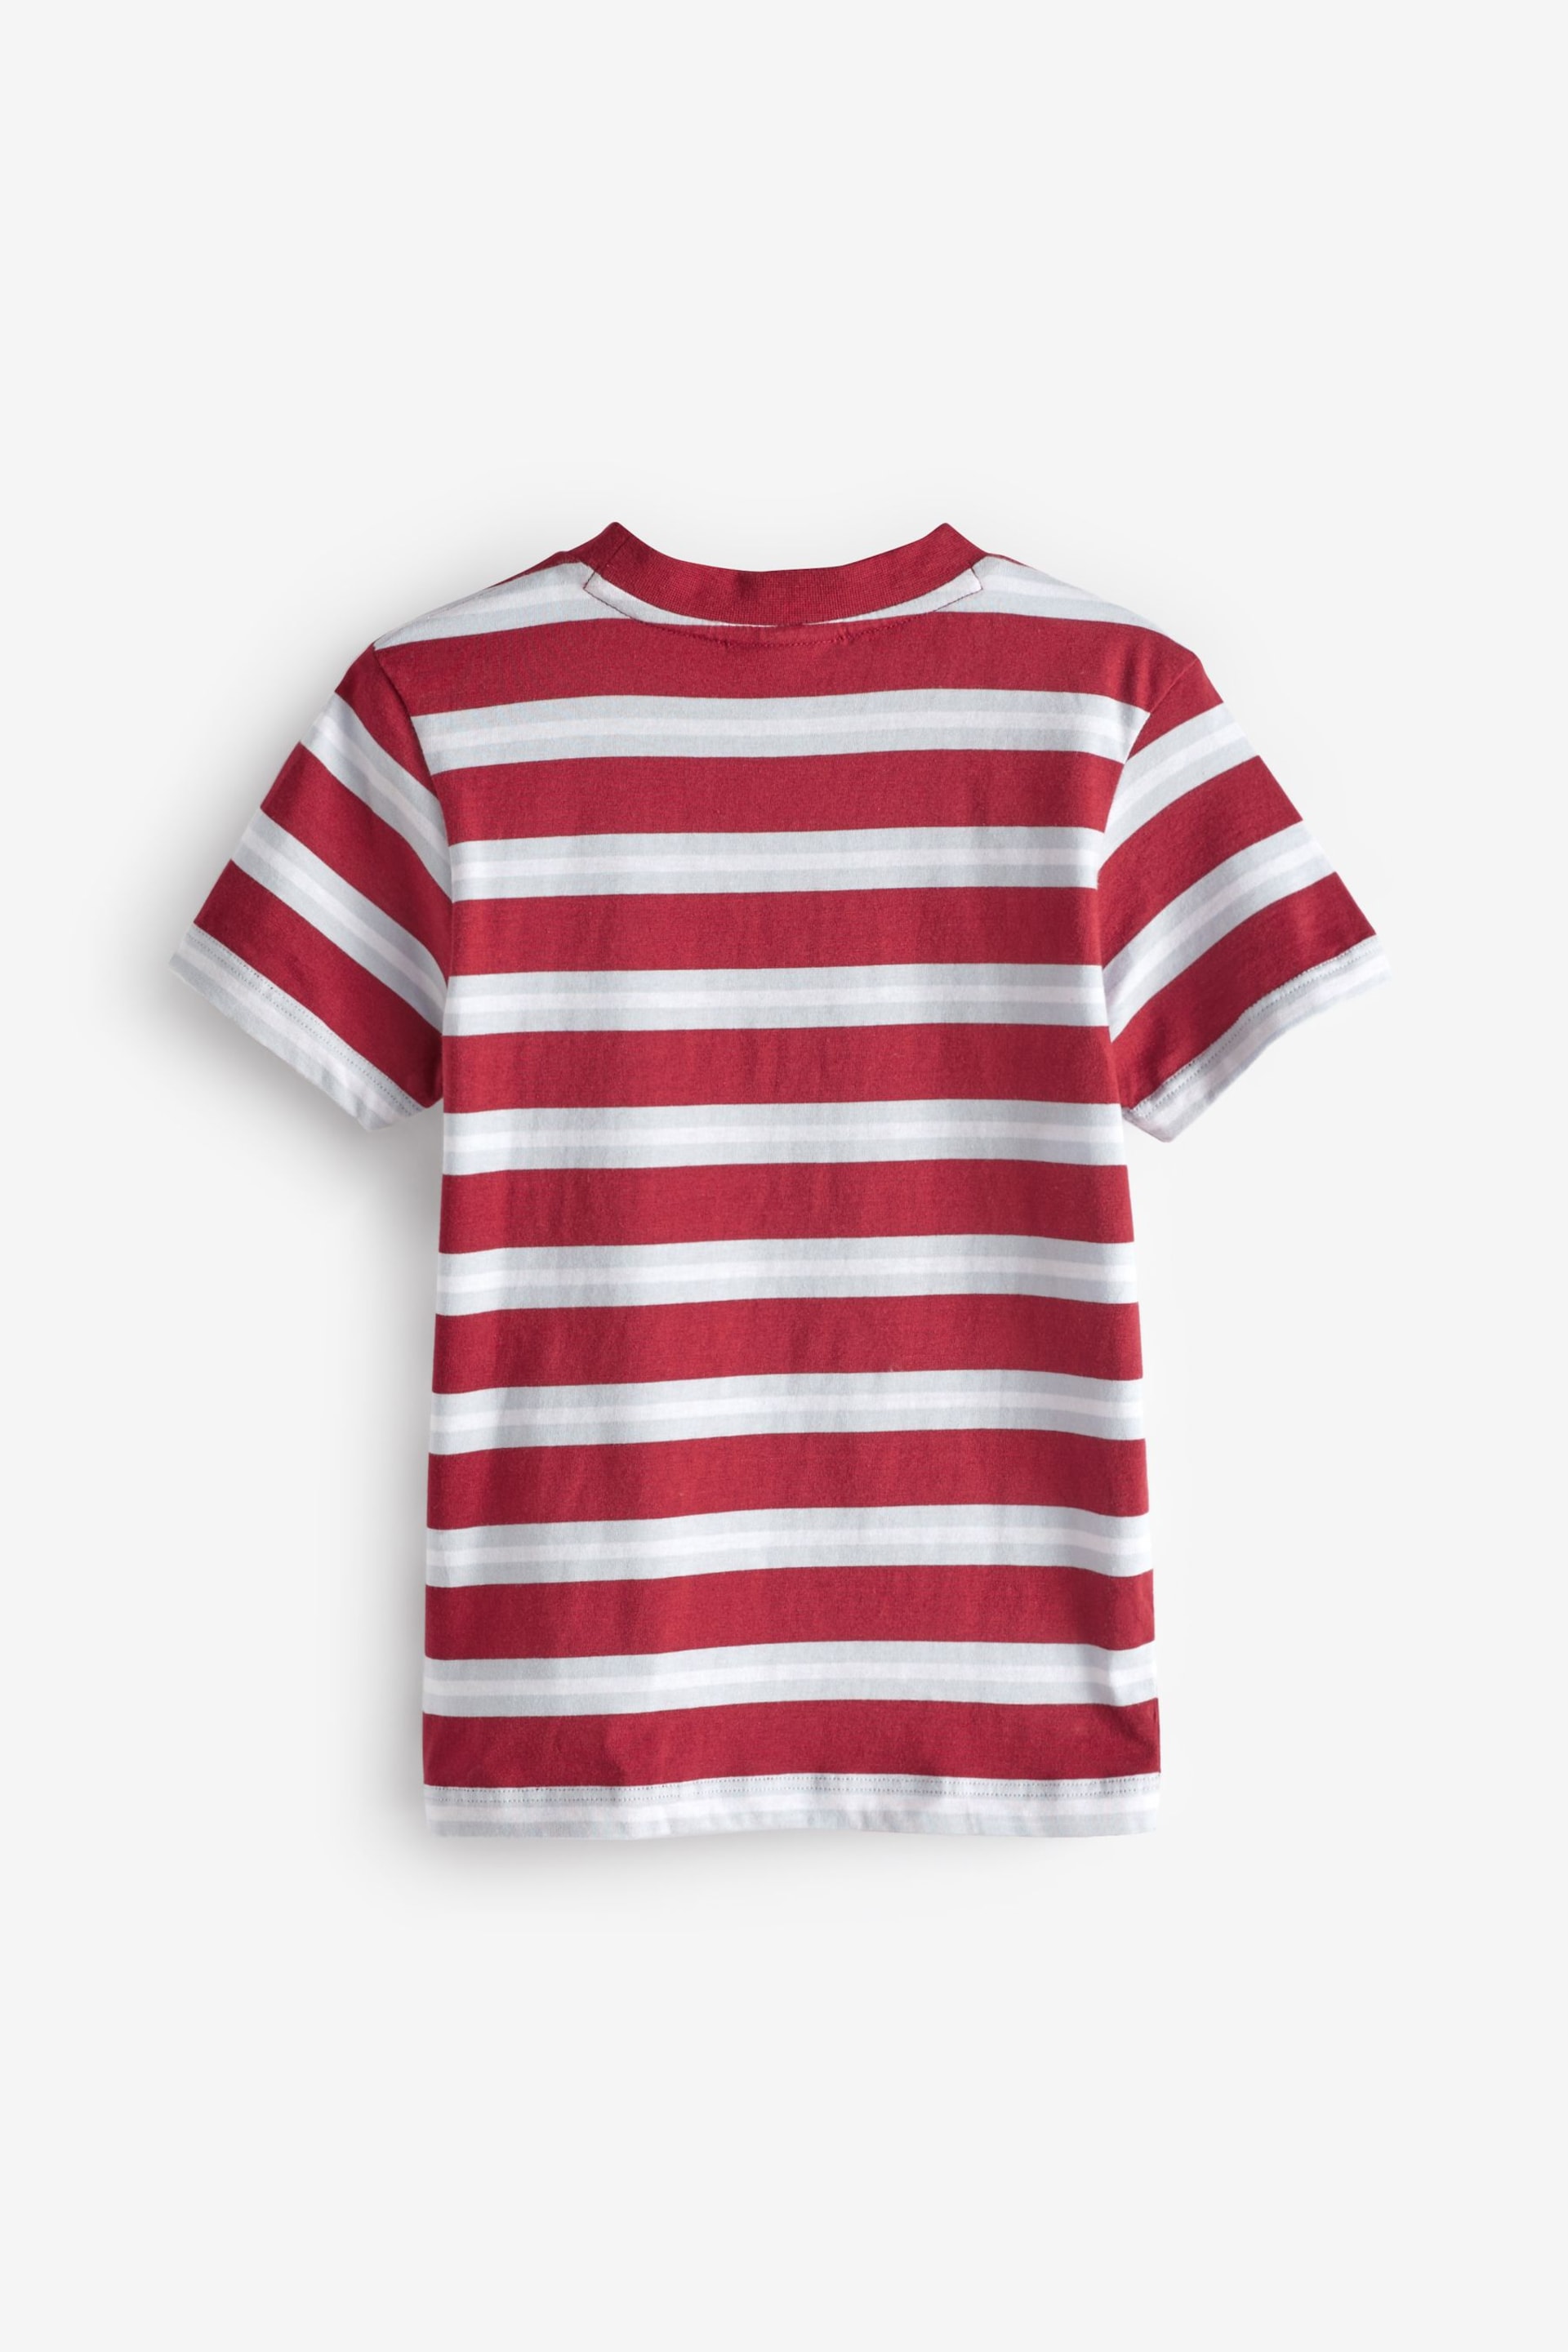 Lacoste Children's Stripe T-Shirt - Image 2 of 3